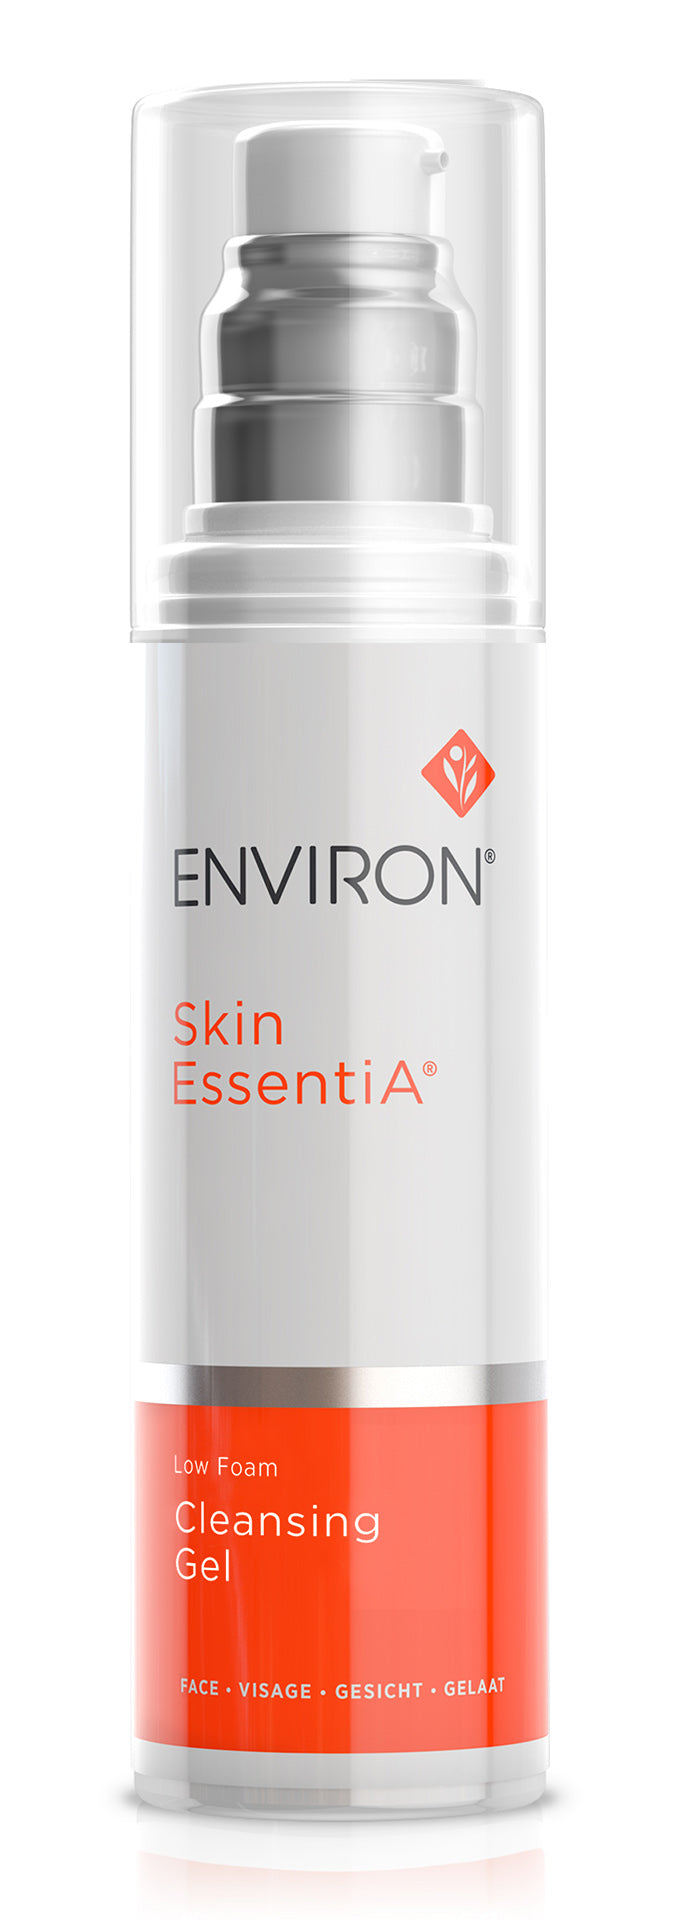 Skin EssentiA | Low Foam Cleansing Gel